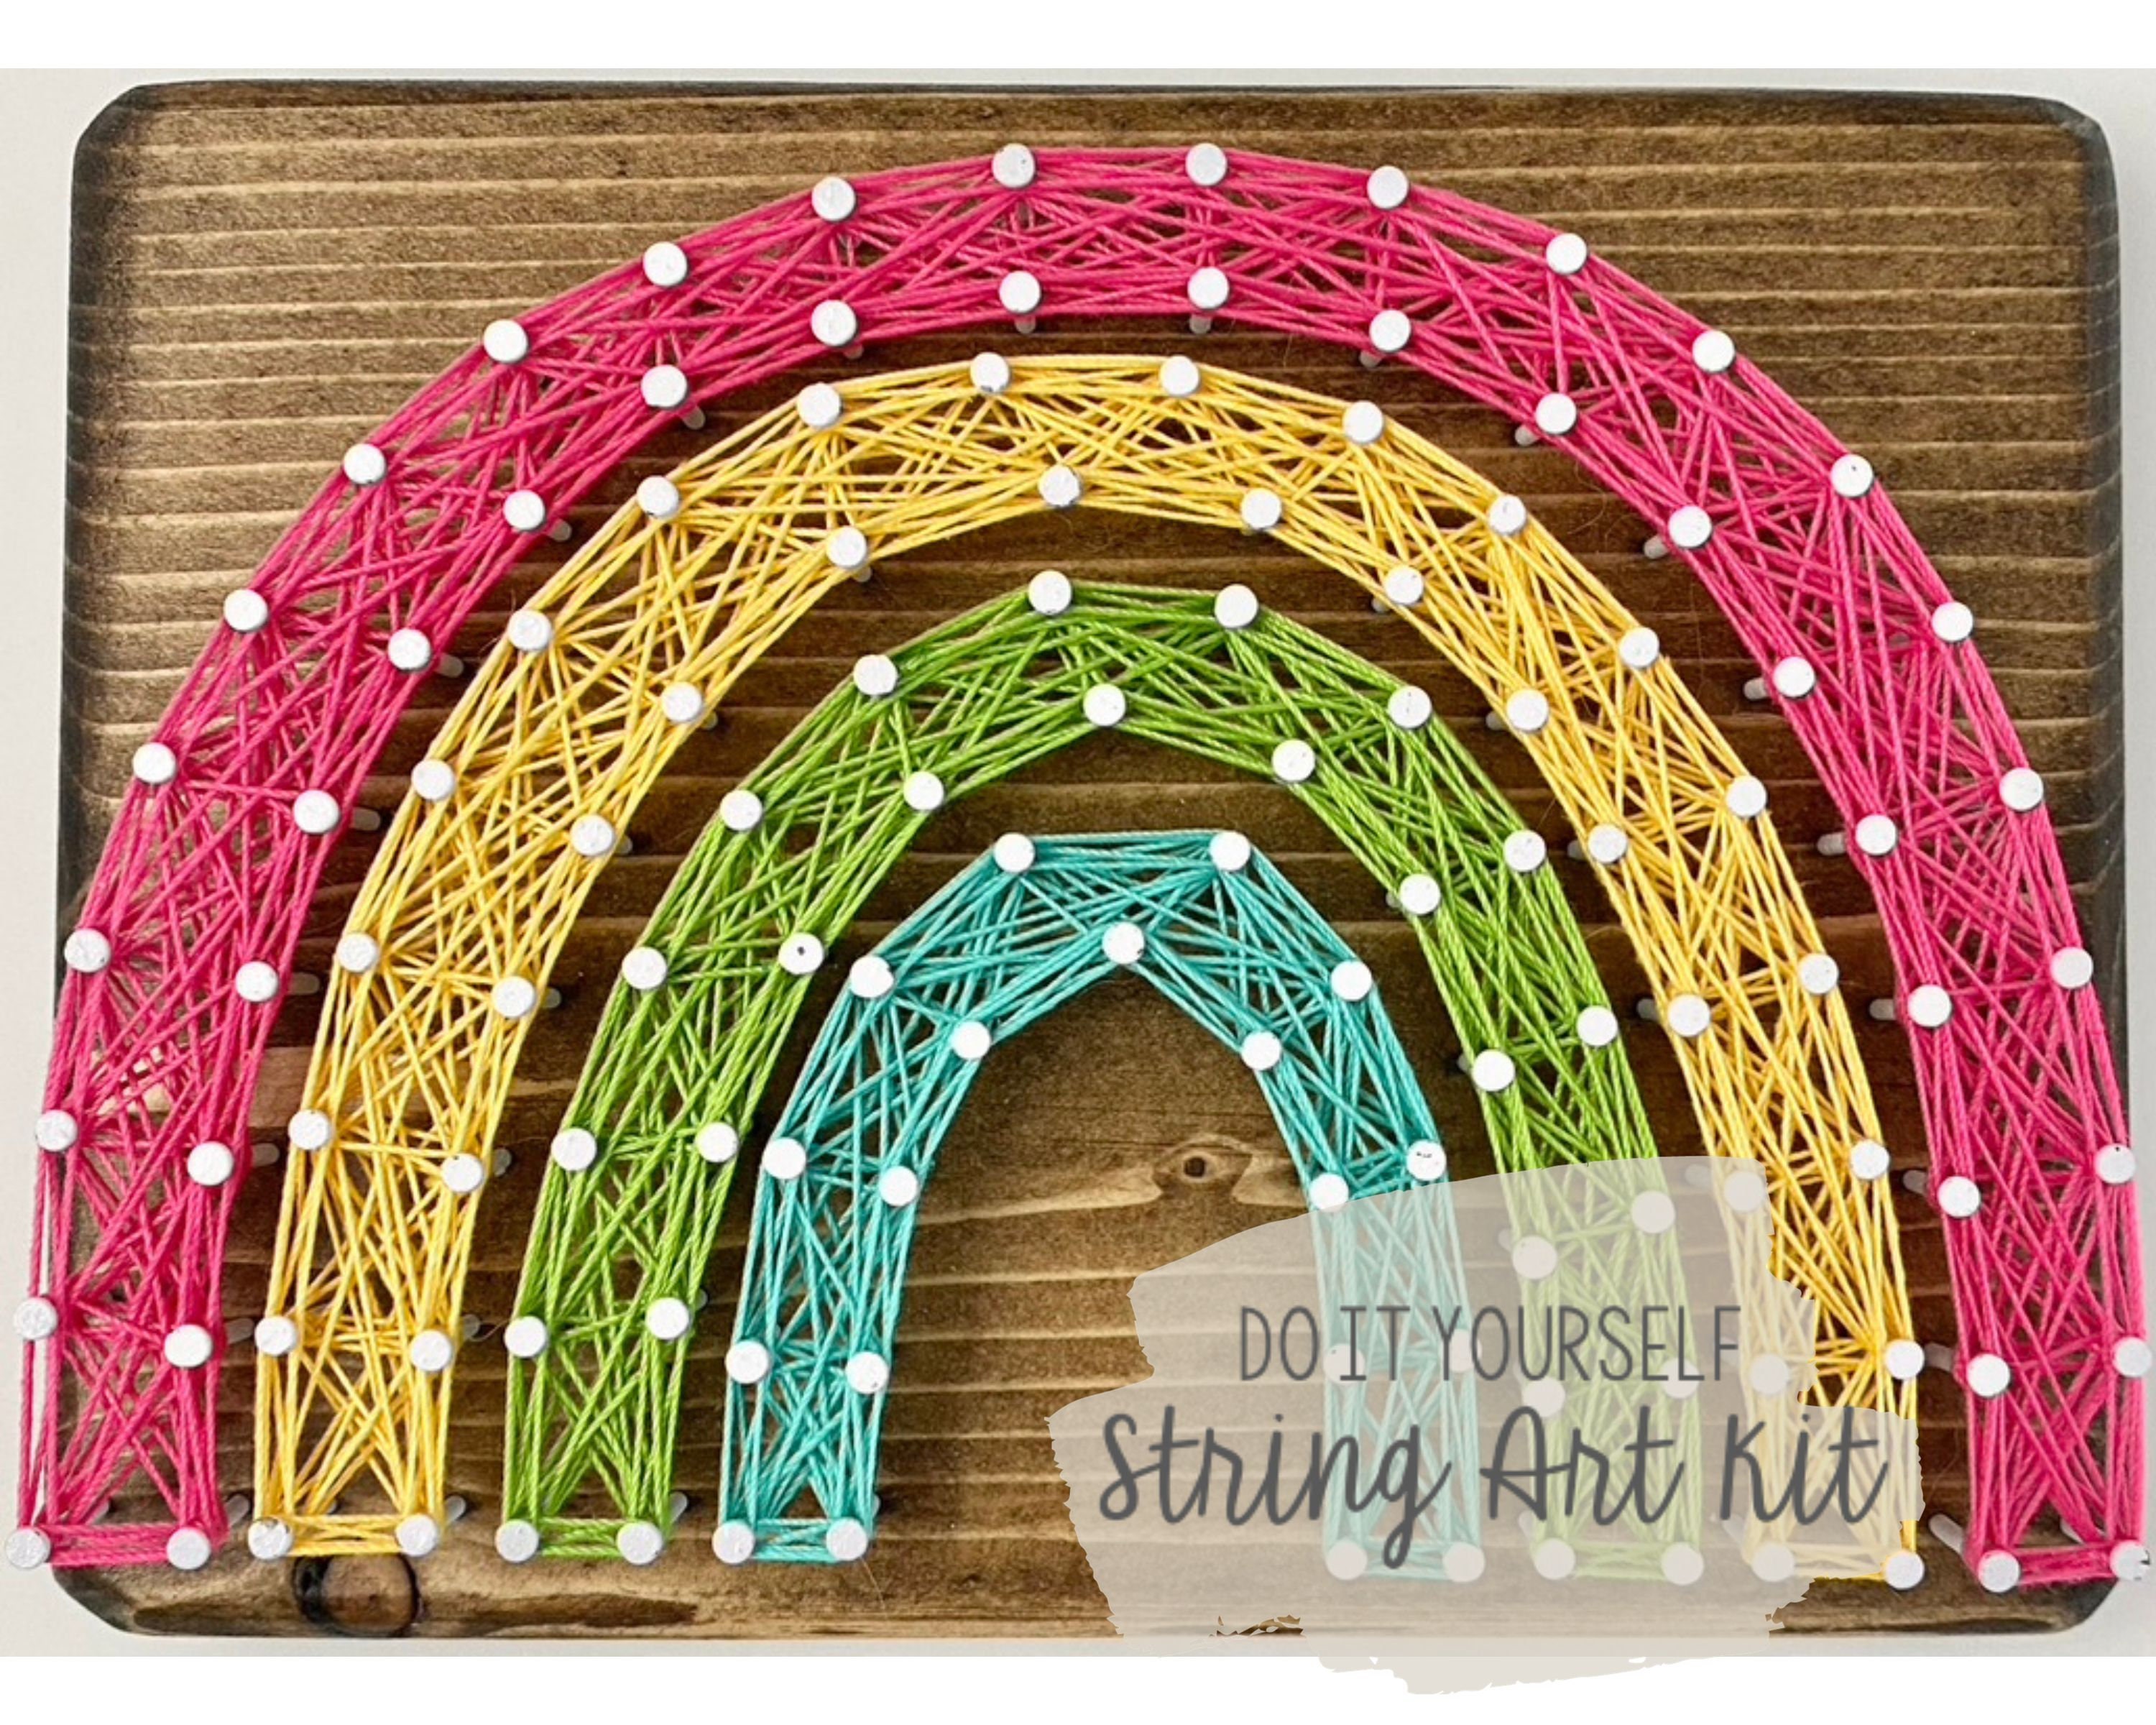 Just My Style D.I.Y. Rainbow Bracelet Maker, Arts & Crafts, 6 